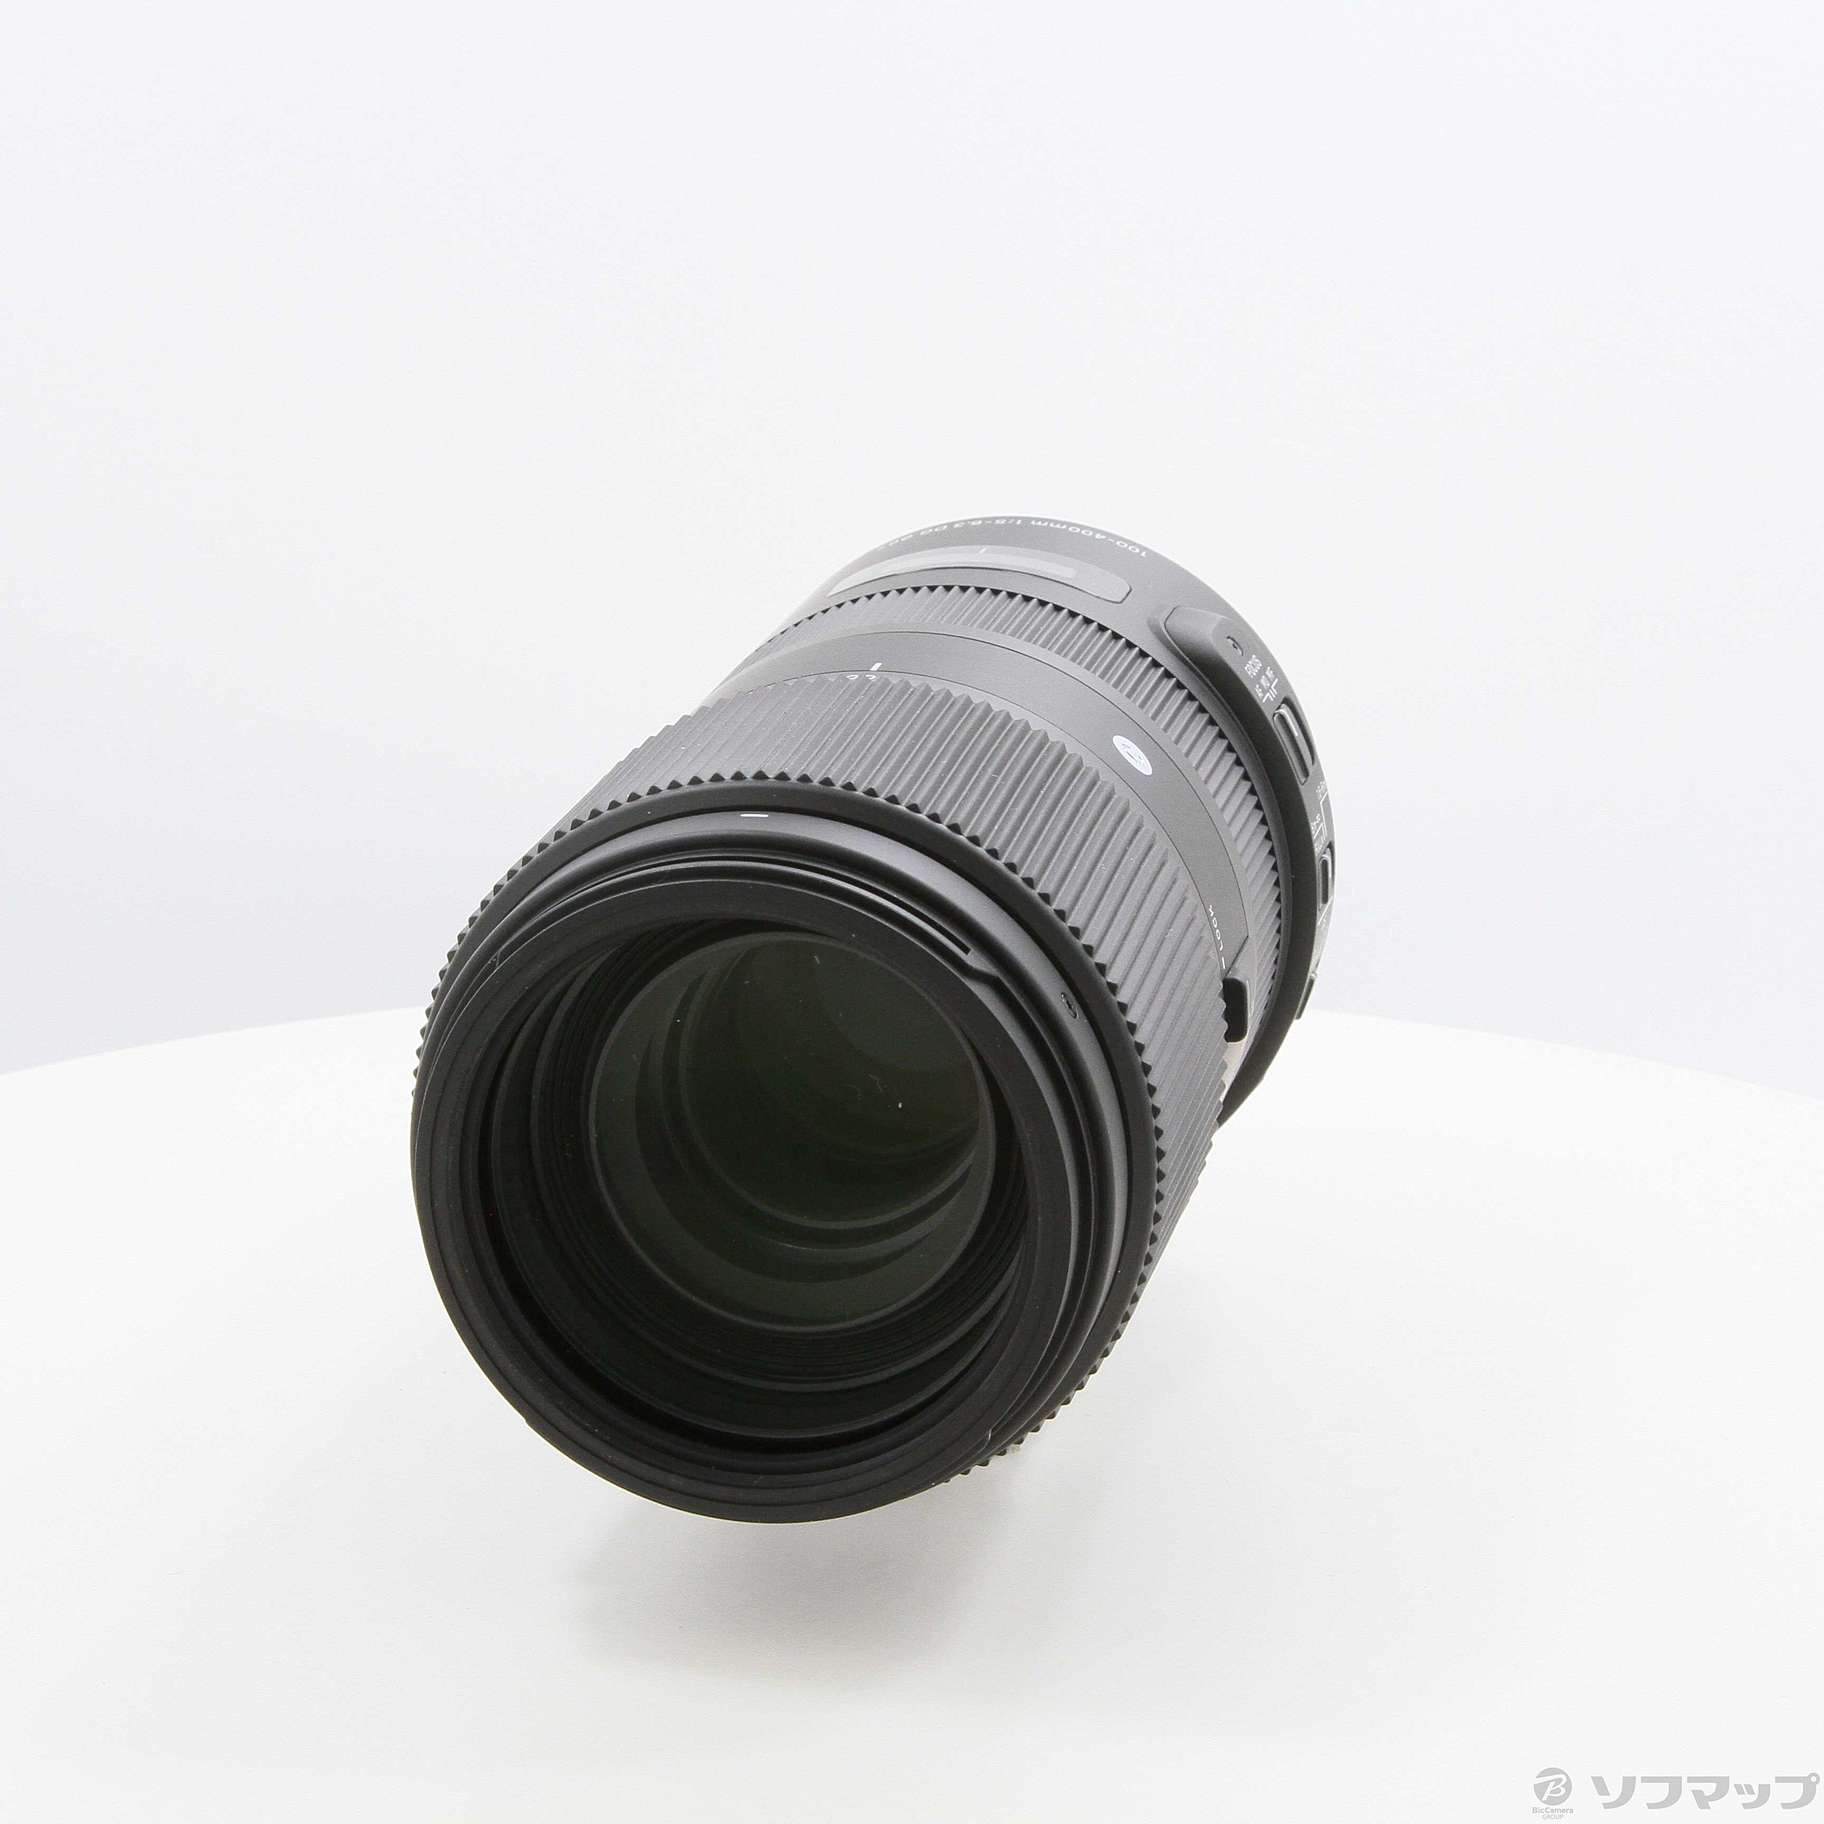 SIGMA 100-400mm Nikon Fマウント